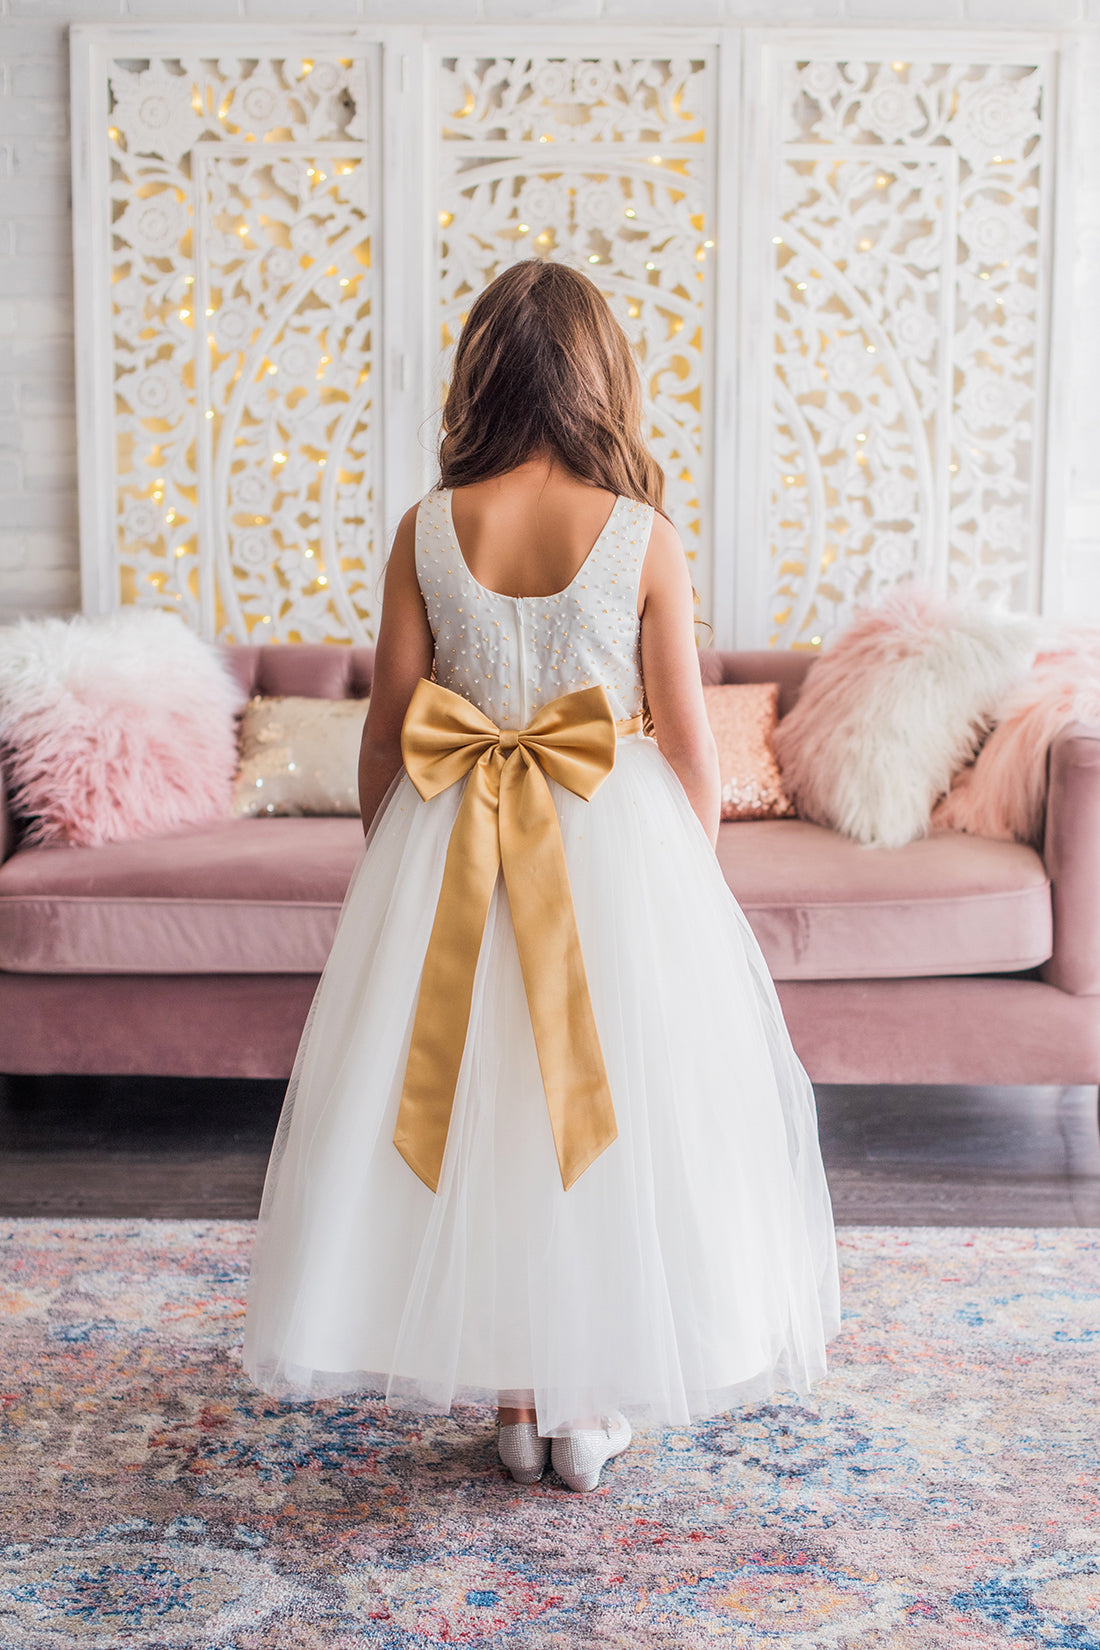 Armoniia White & Gold Flower Girl Dress